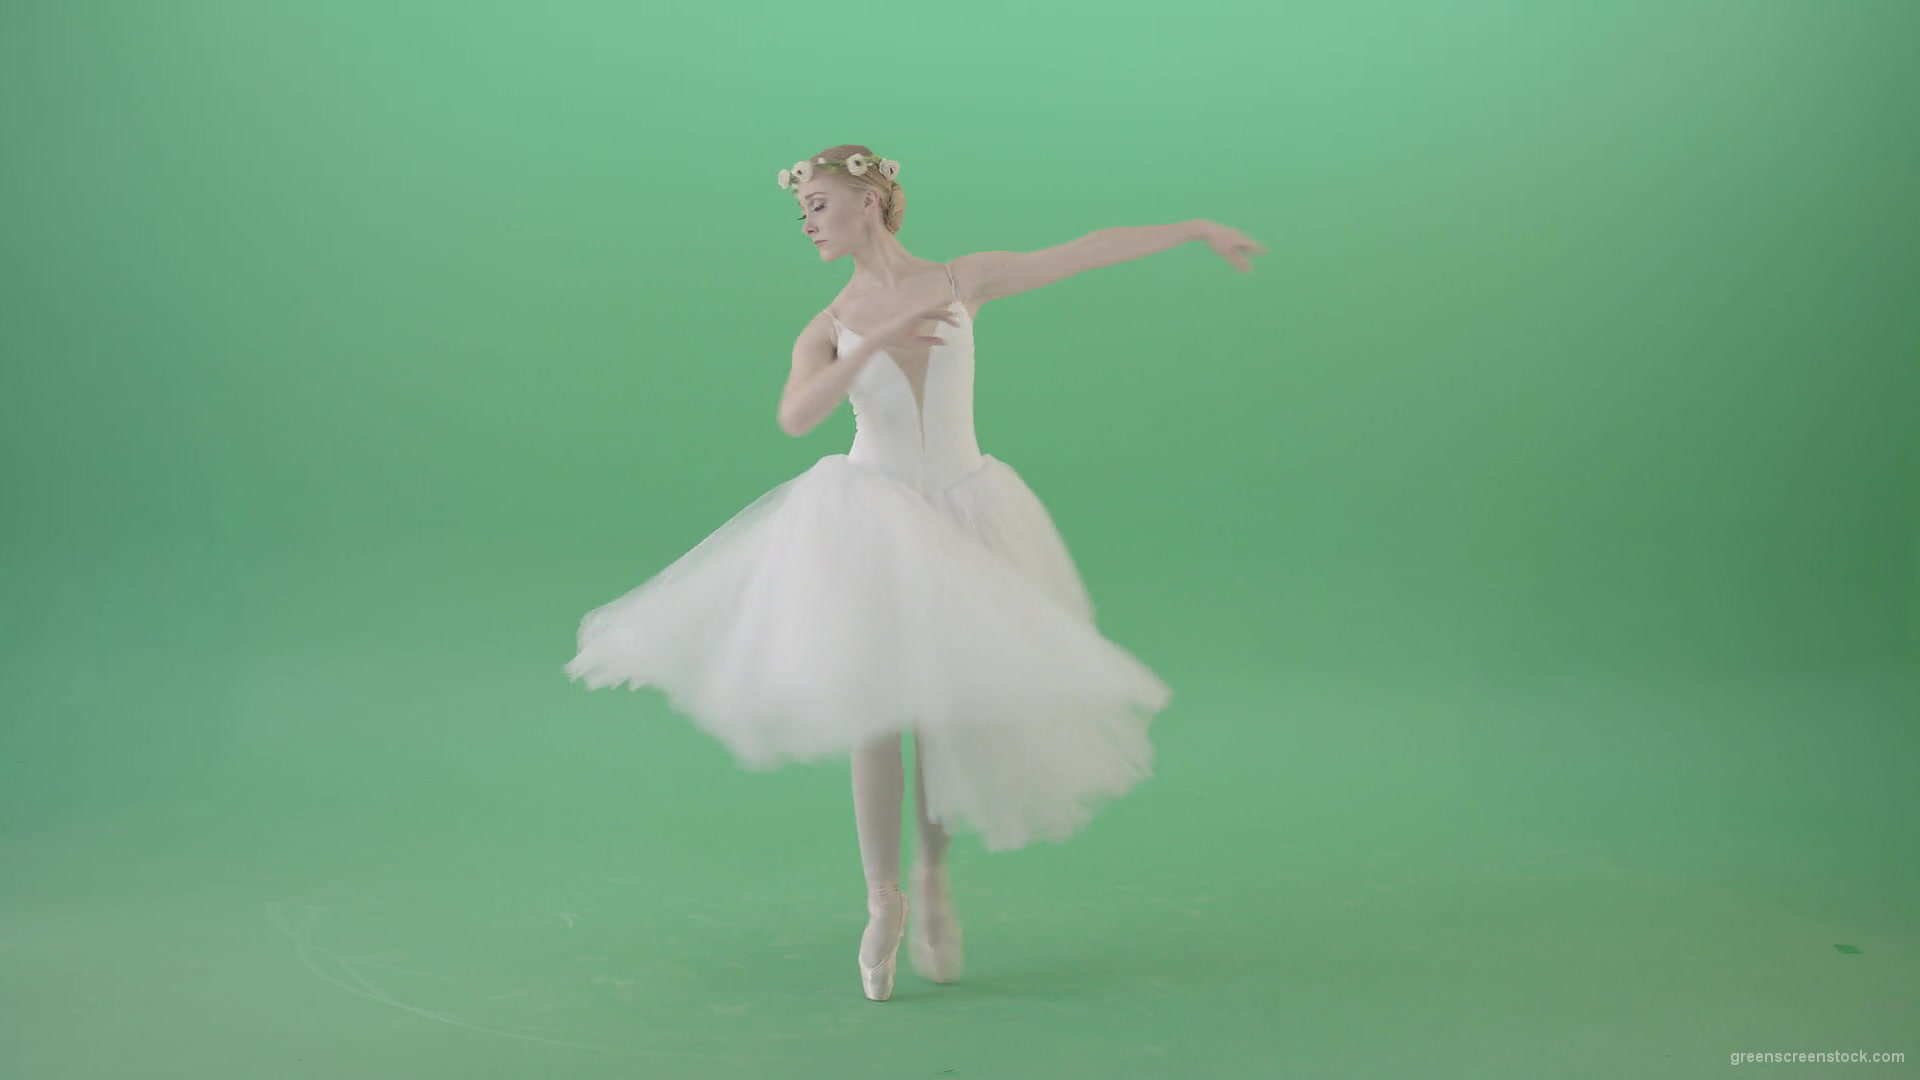 Ballerina-in-elegance-white-wedding-dress-spinning-in-dance-on-green-screen-4K-Video-Footage-1920_005 Green Screen Stock